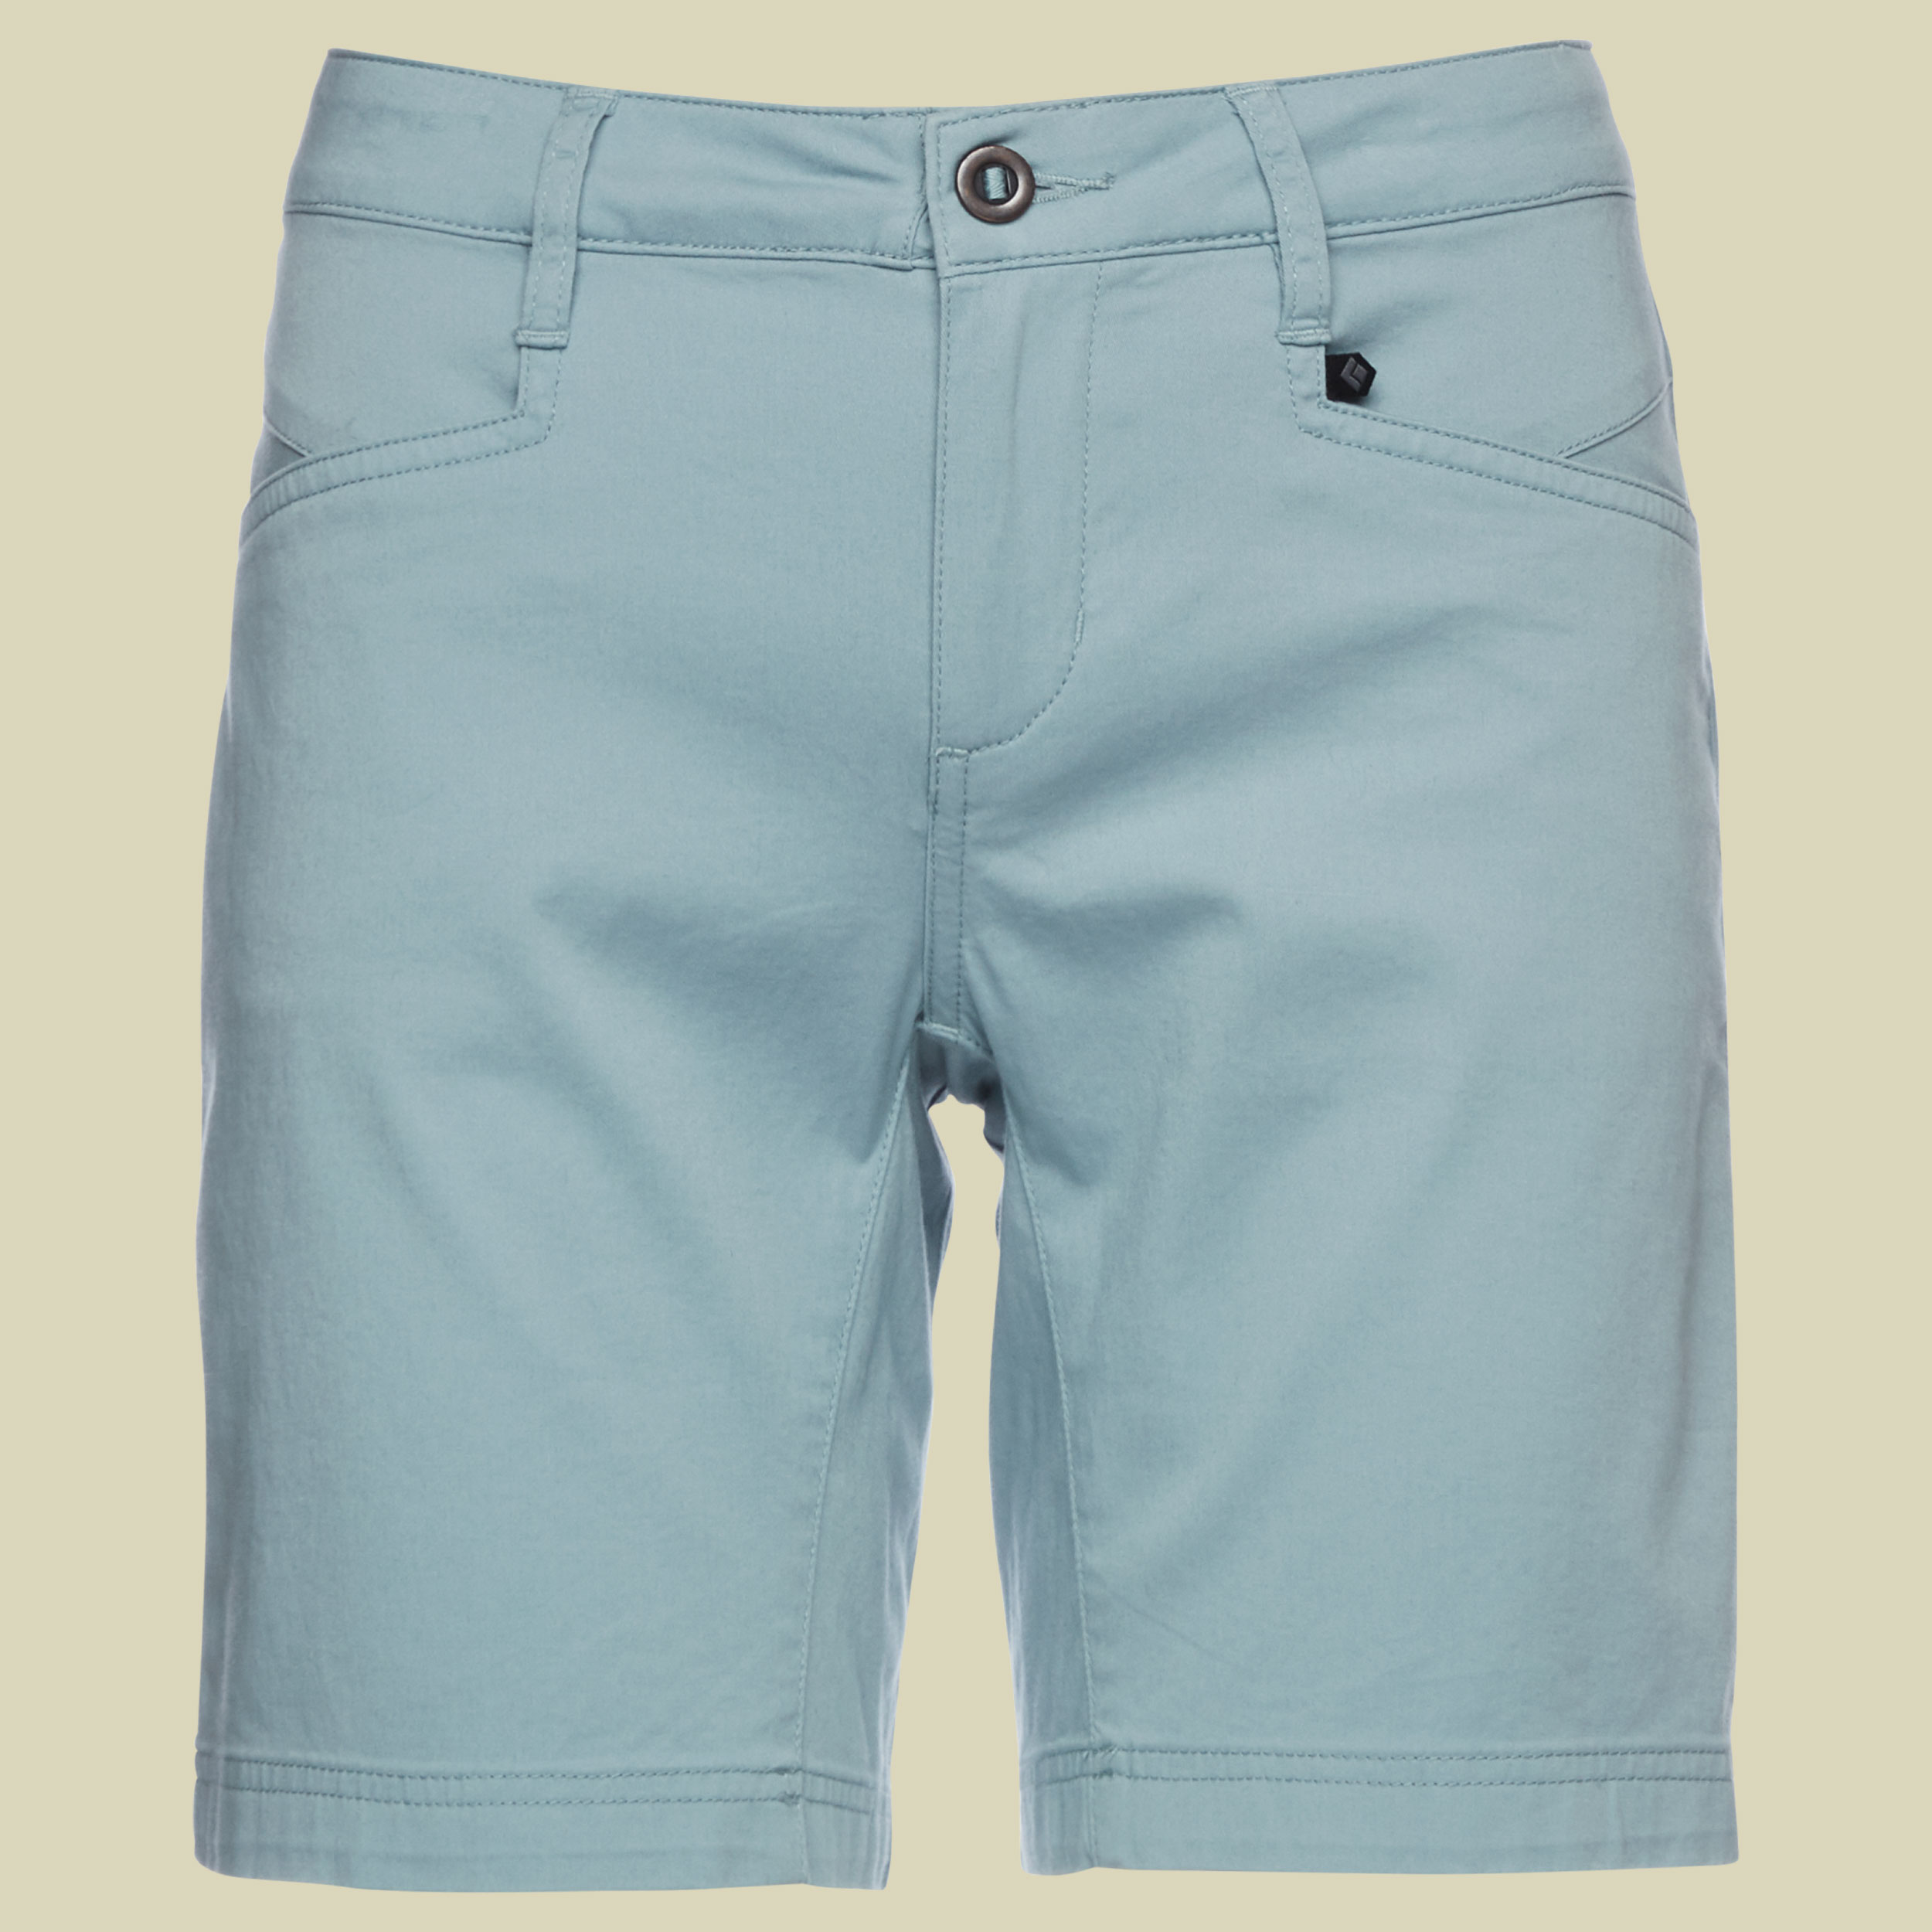 Notion SL Shorts Women Größe M  (8) Farbe blue ash